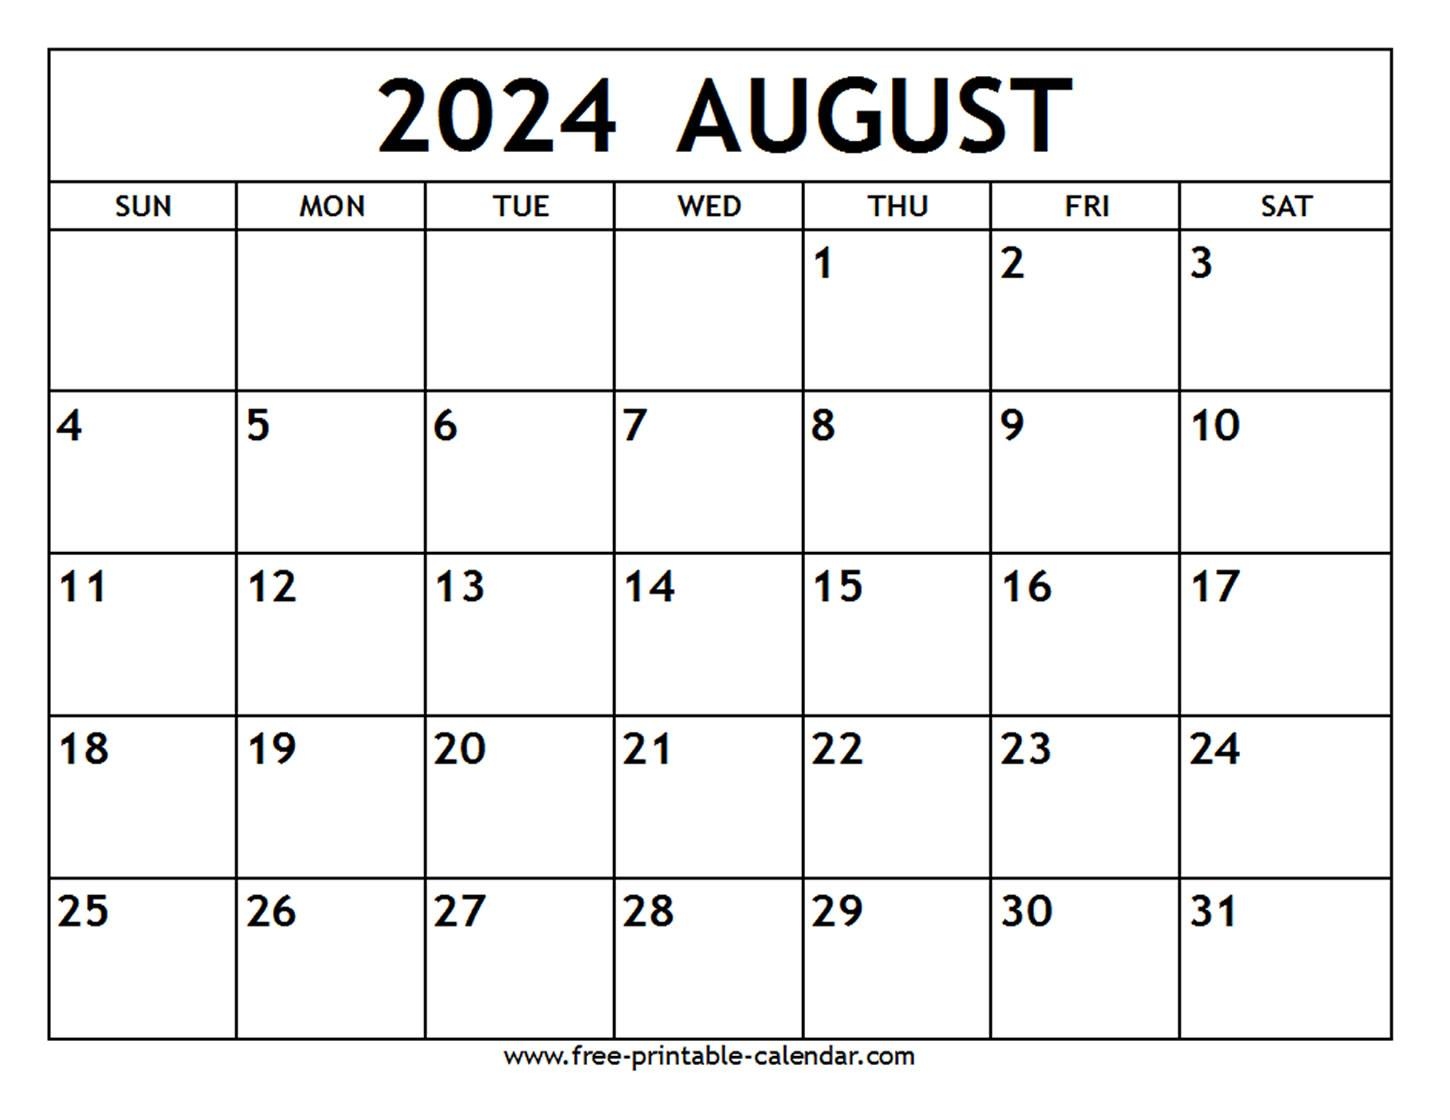 August 2024 Calendar - Free-Printable-Calendar in Free Printable August 2024 Calendar Word